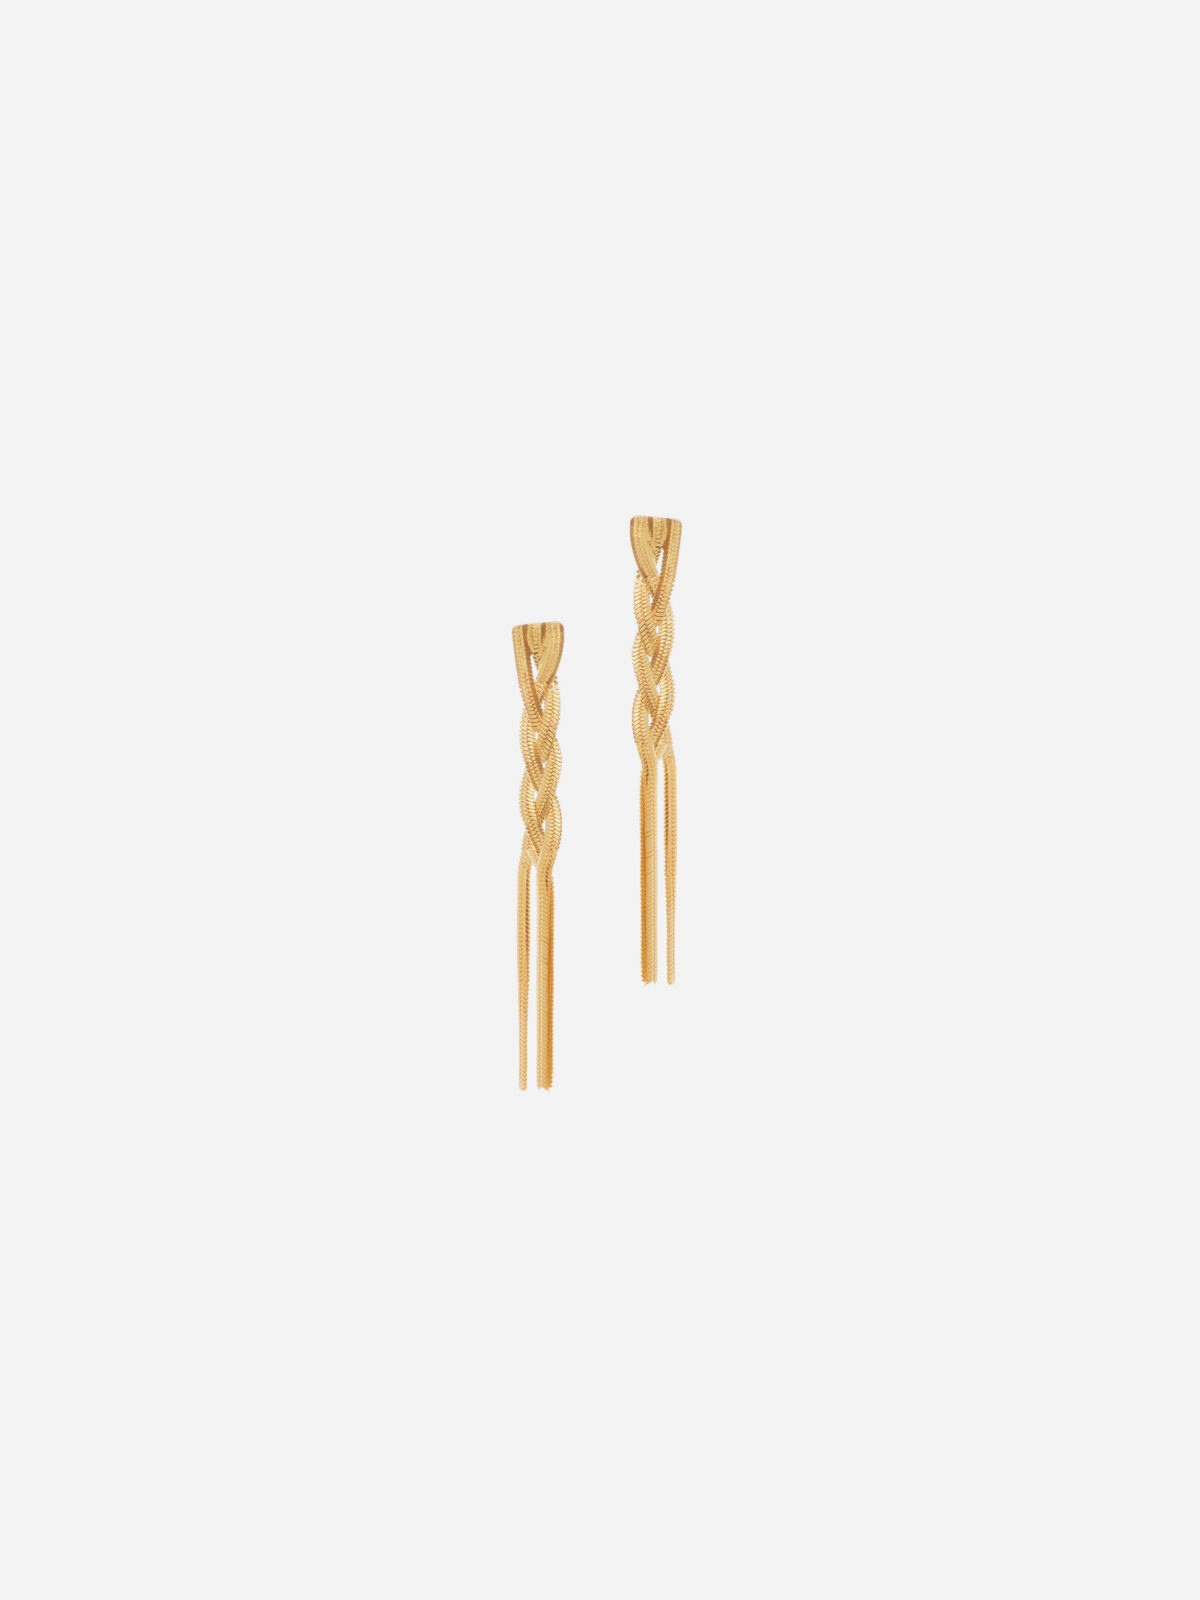 LB312-liquid-braided-earrings-snake-chain-gold-silver-maggoosh-matchboxathens